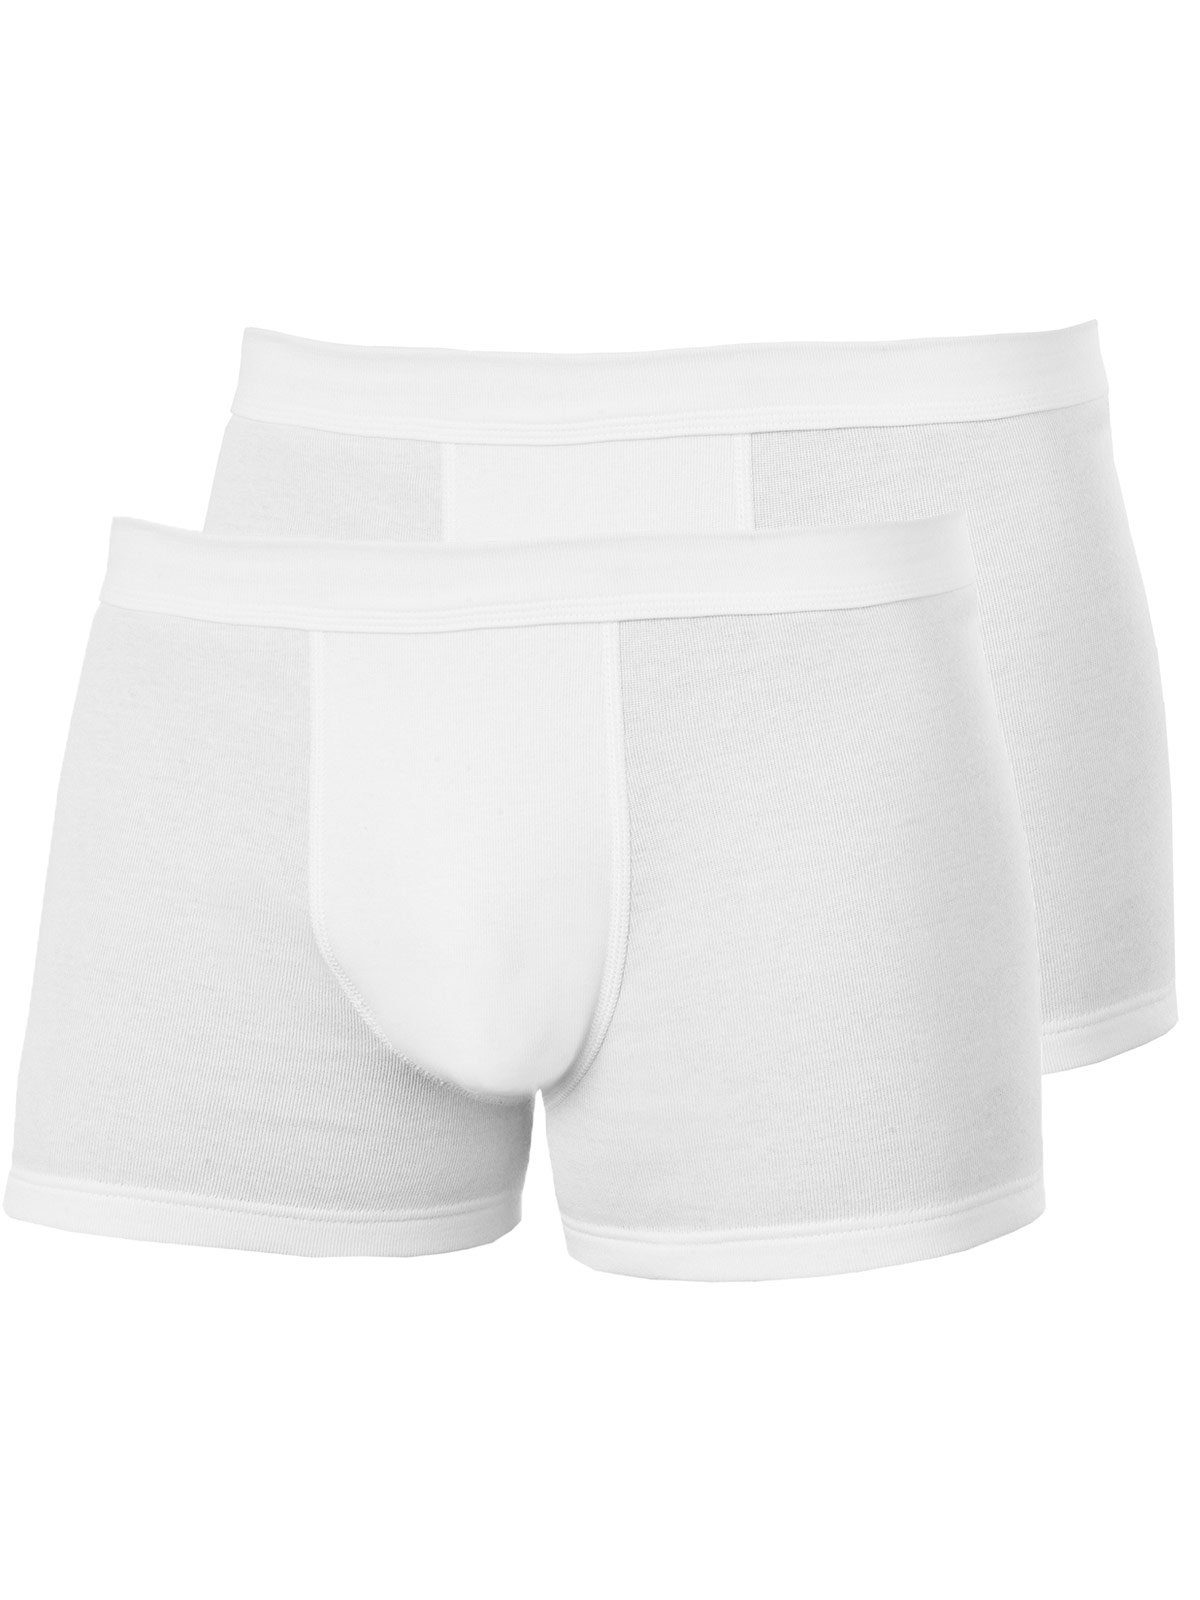 KUMPF Retro Pants Herren Pants 2er Pack Bio Cotton (Packung, 2-St) -